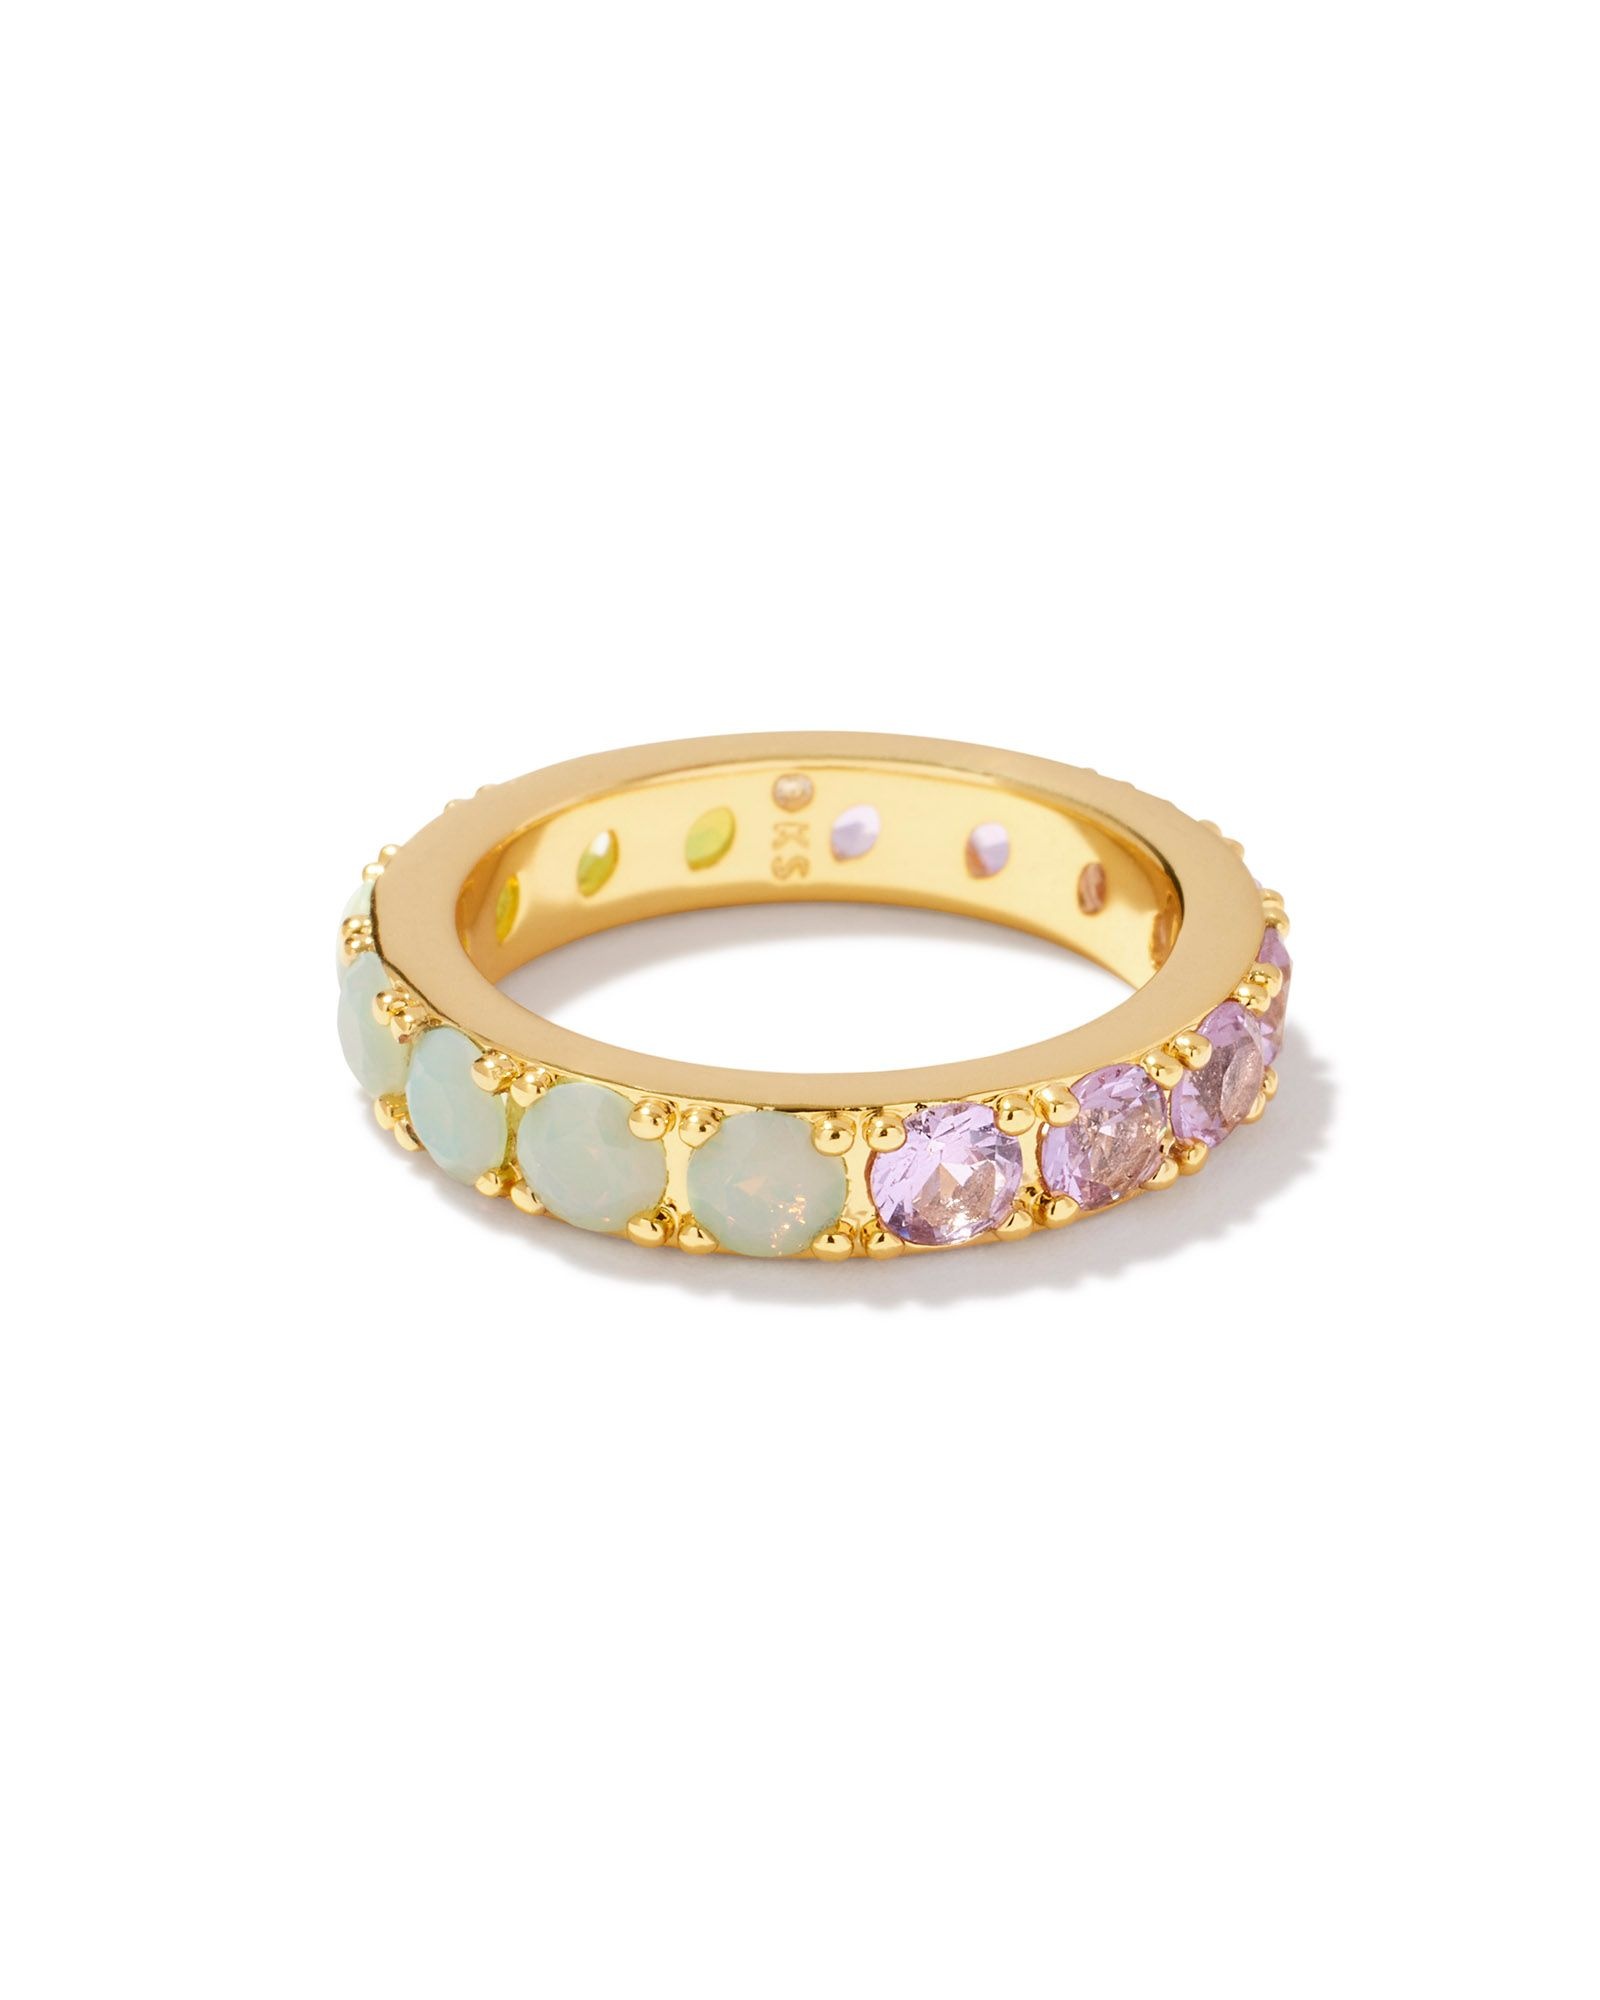 Fine Jewelry Rings | Kendra Scott